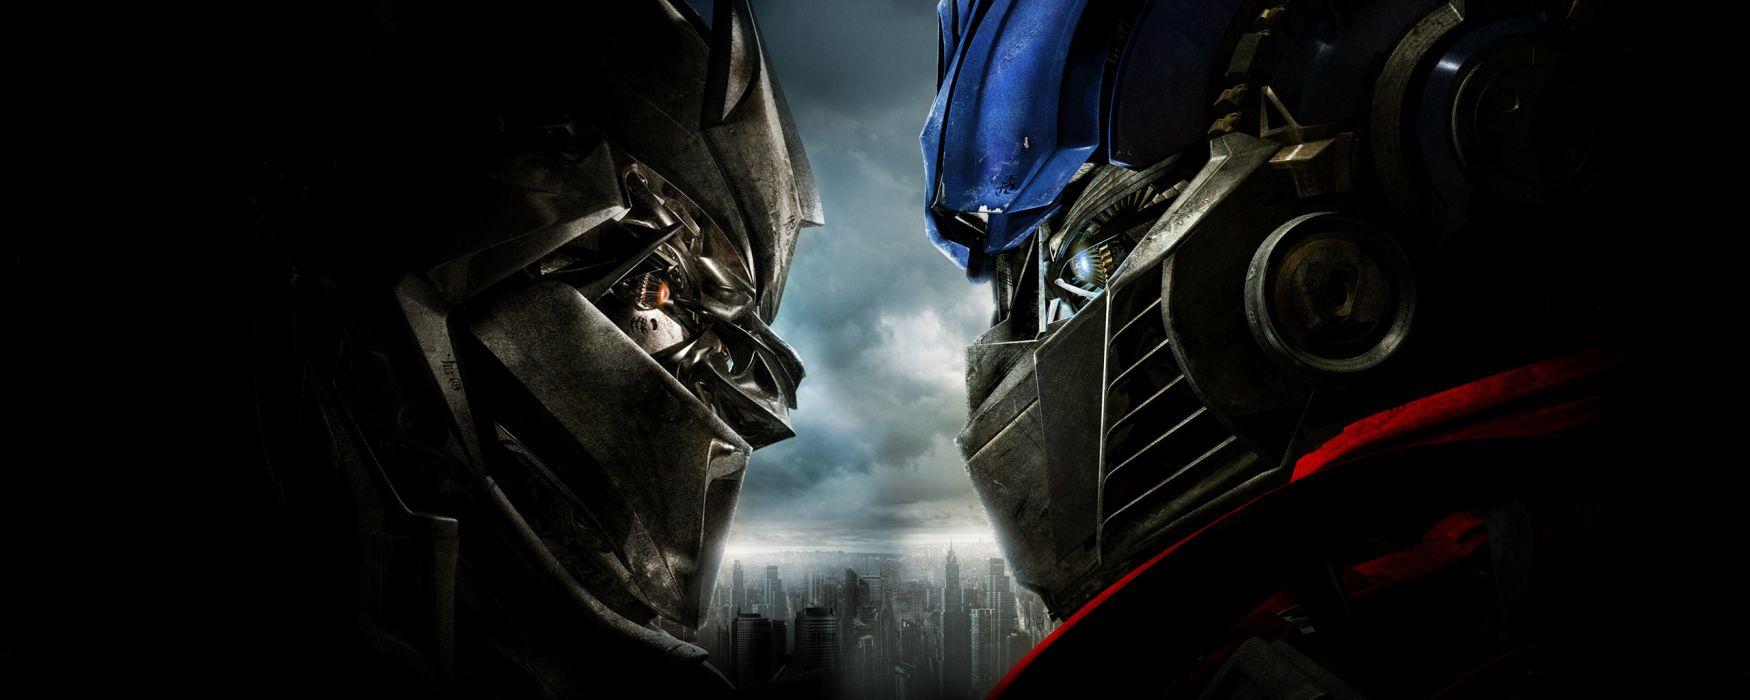 Optimus Prime Megatron Transformers 2 of the Fallen wallpaperx1024